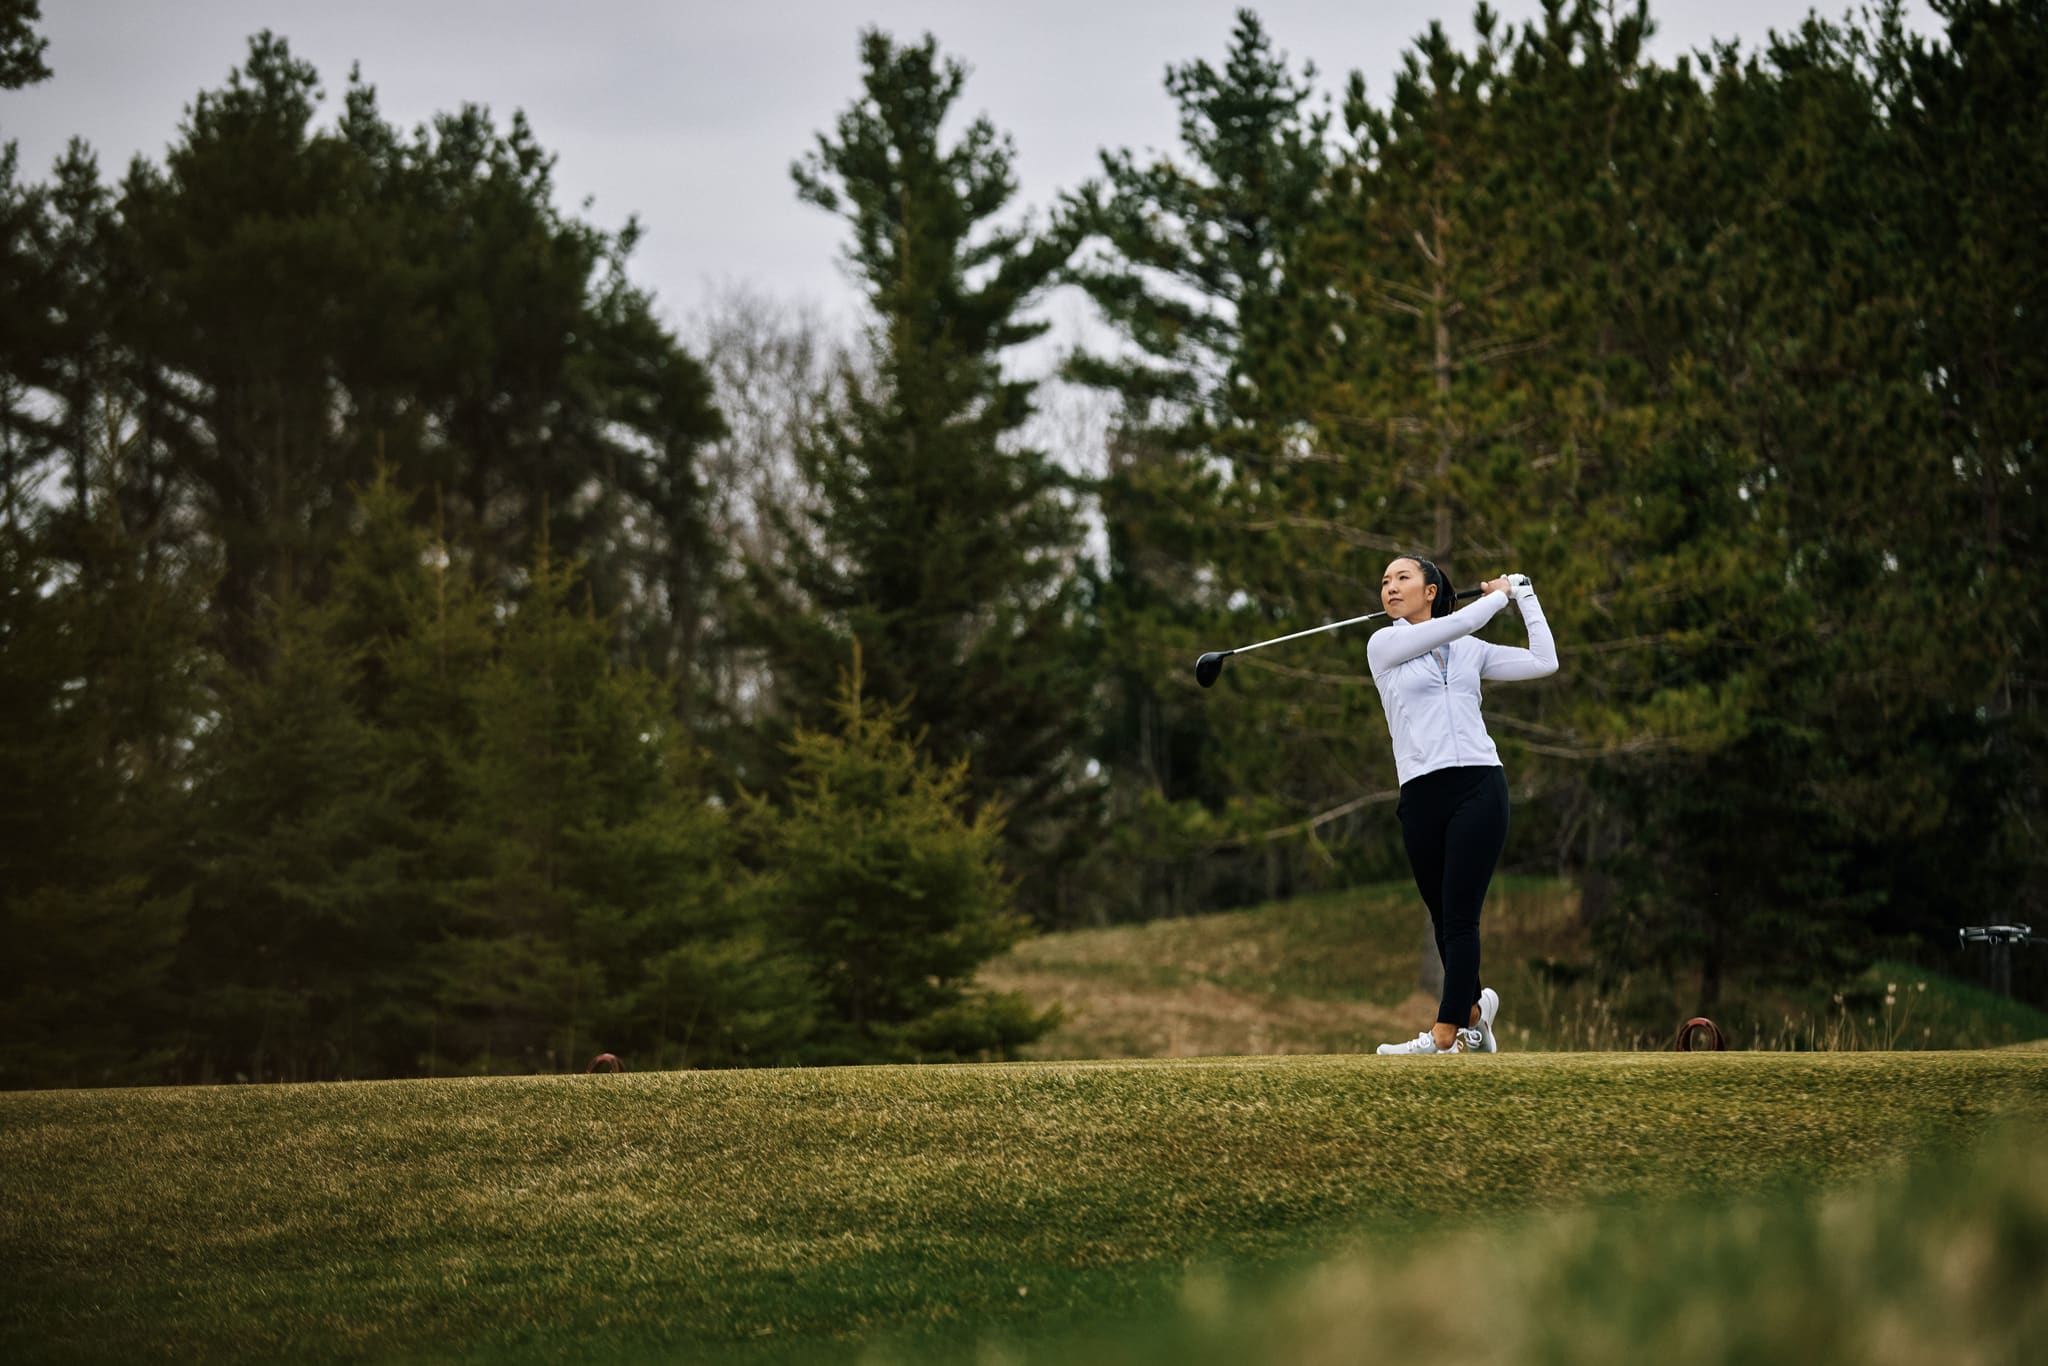 a woman swings a golf club on a golf course